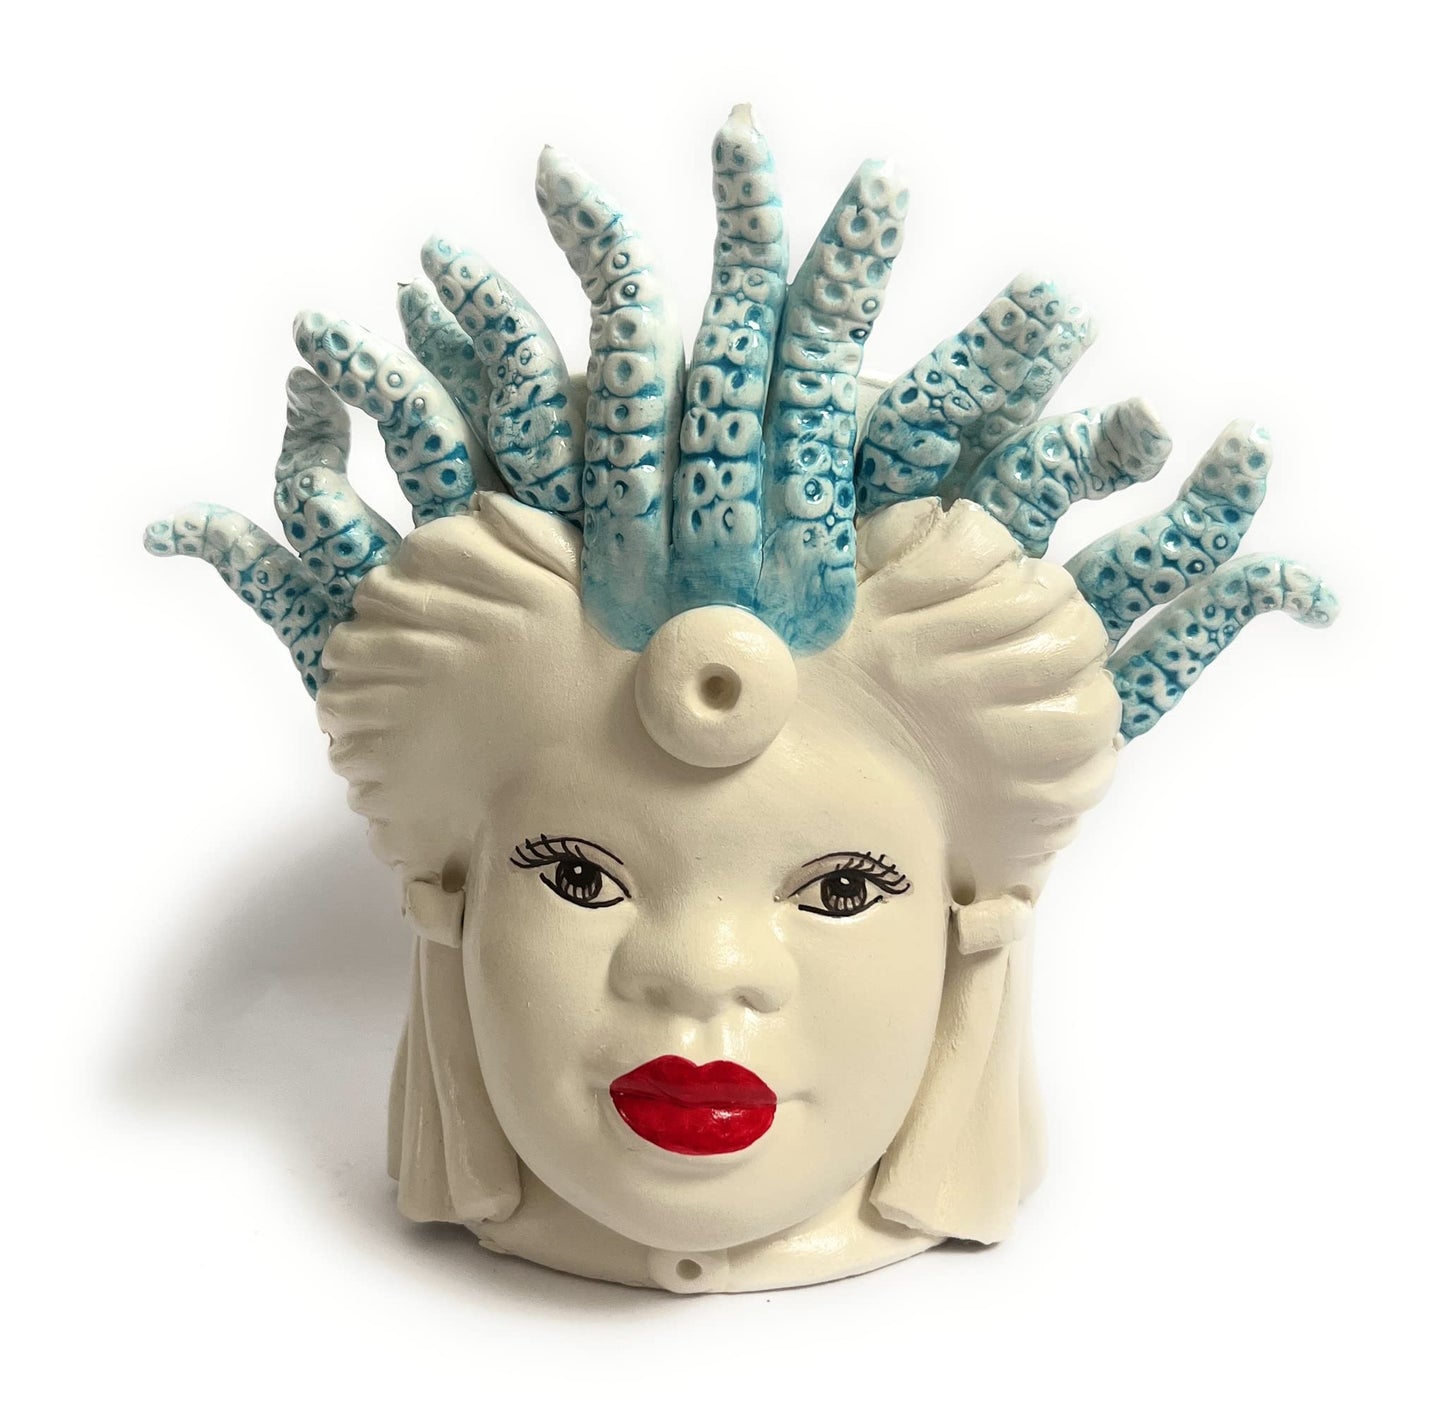 Moro Small Medusa Woman Vase, designed by Abhika, 100% handmade ceramics made in Italy